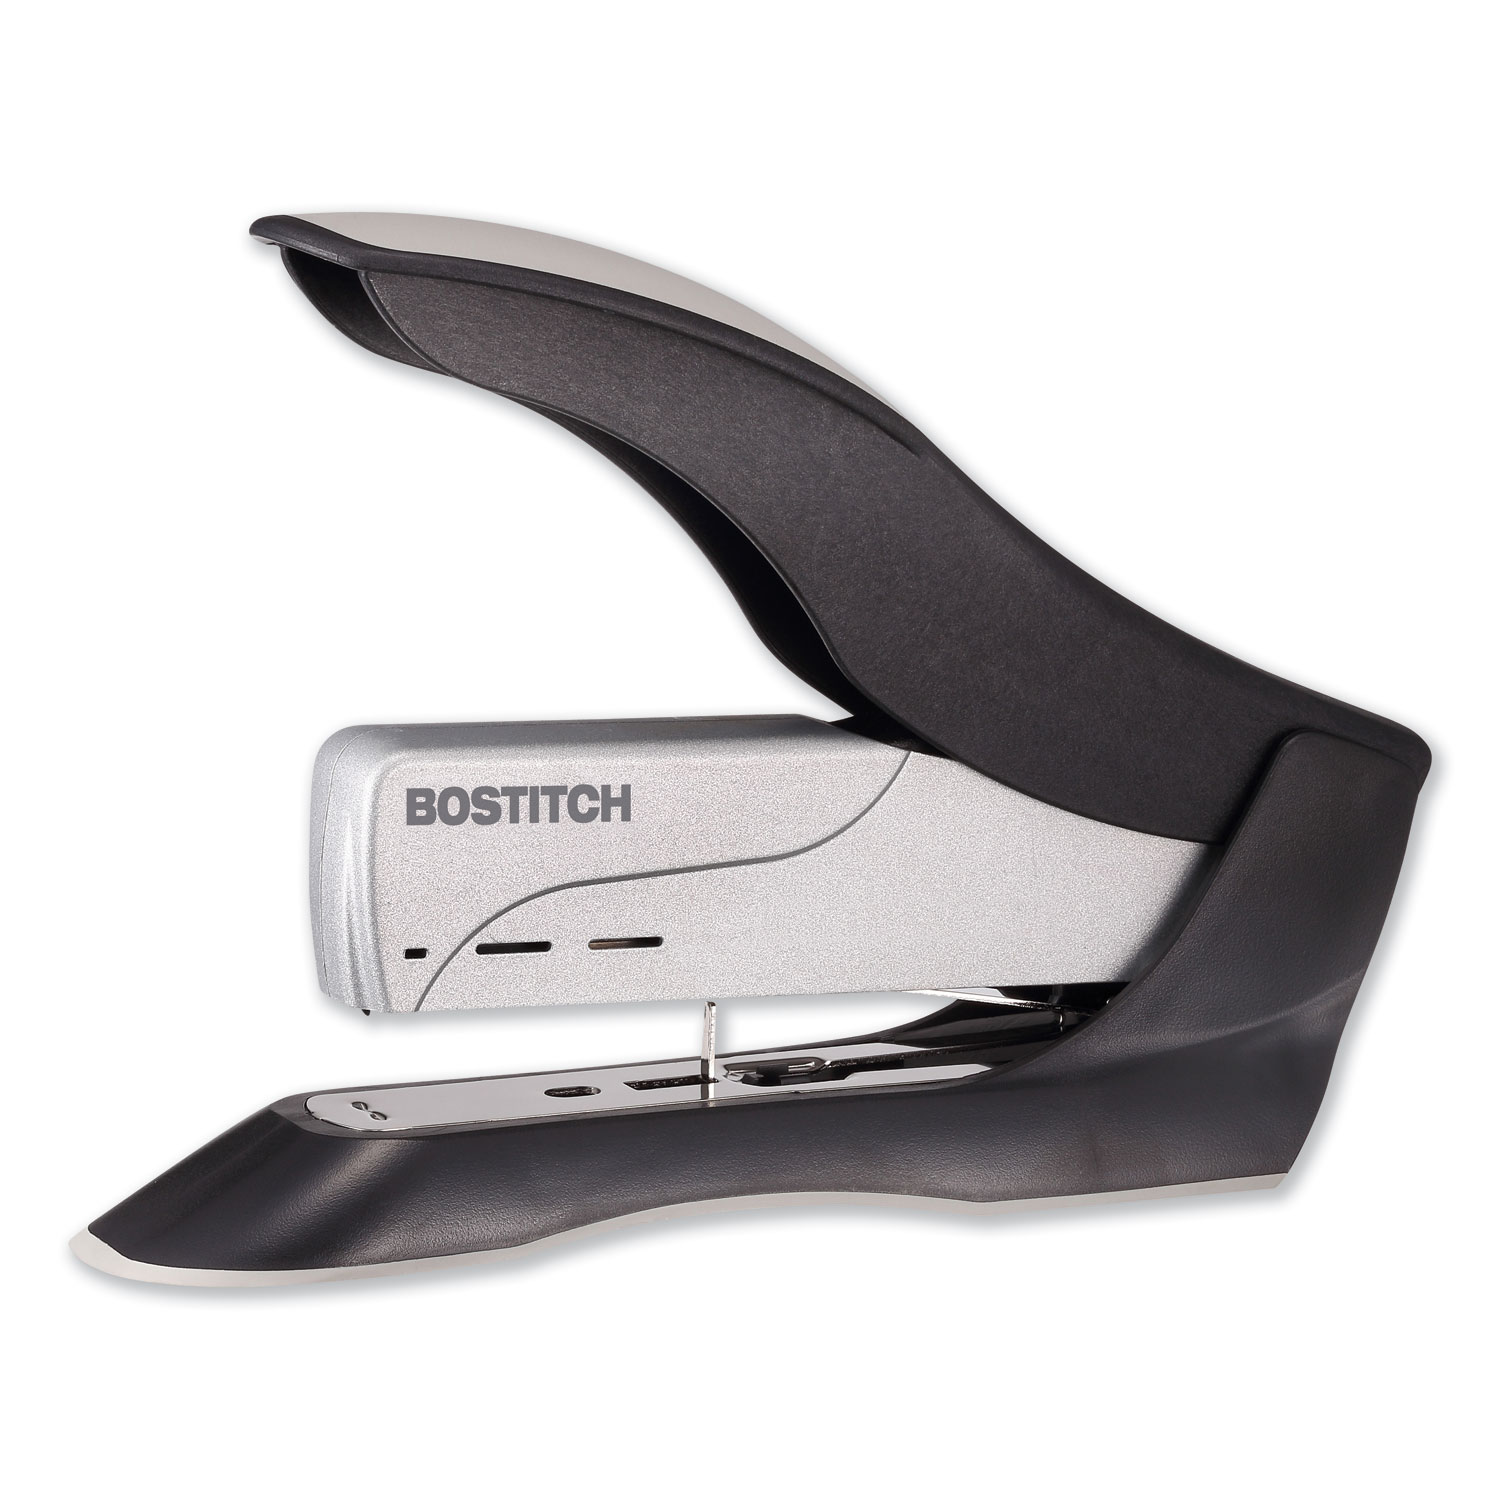  Bostitch 1300 Spring-Powered Premium Heavy-Duty Stapler, 100-Sheet Capacity, Black/Silver (ACI1300) 